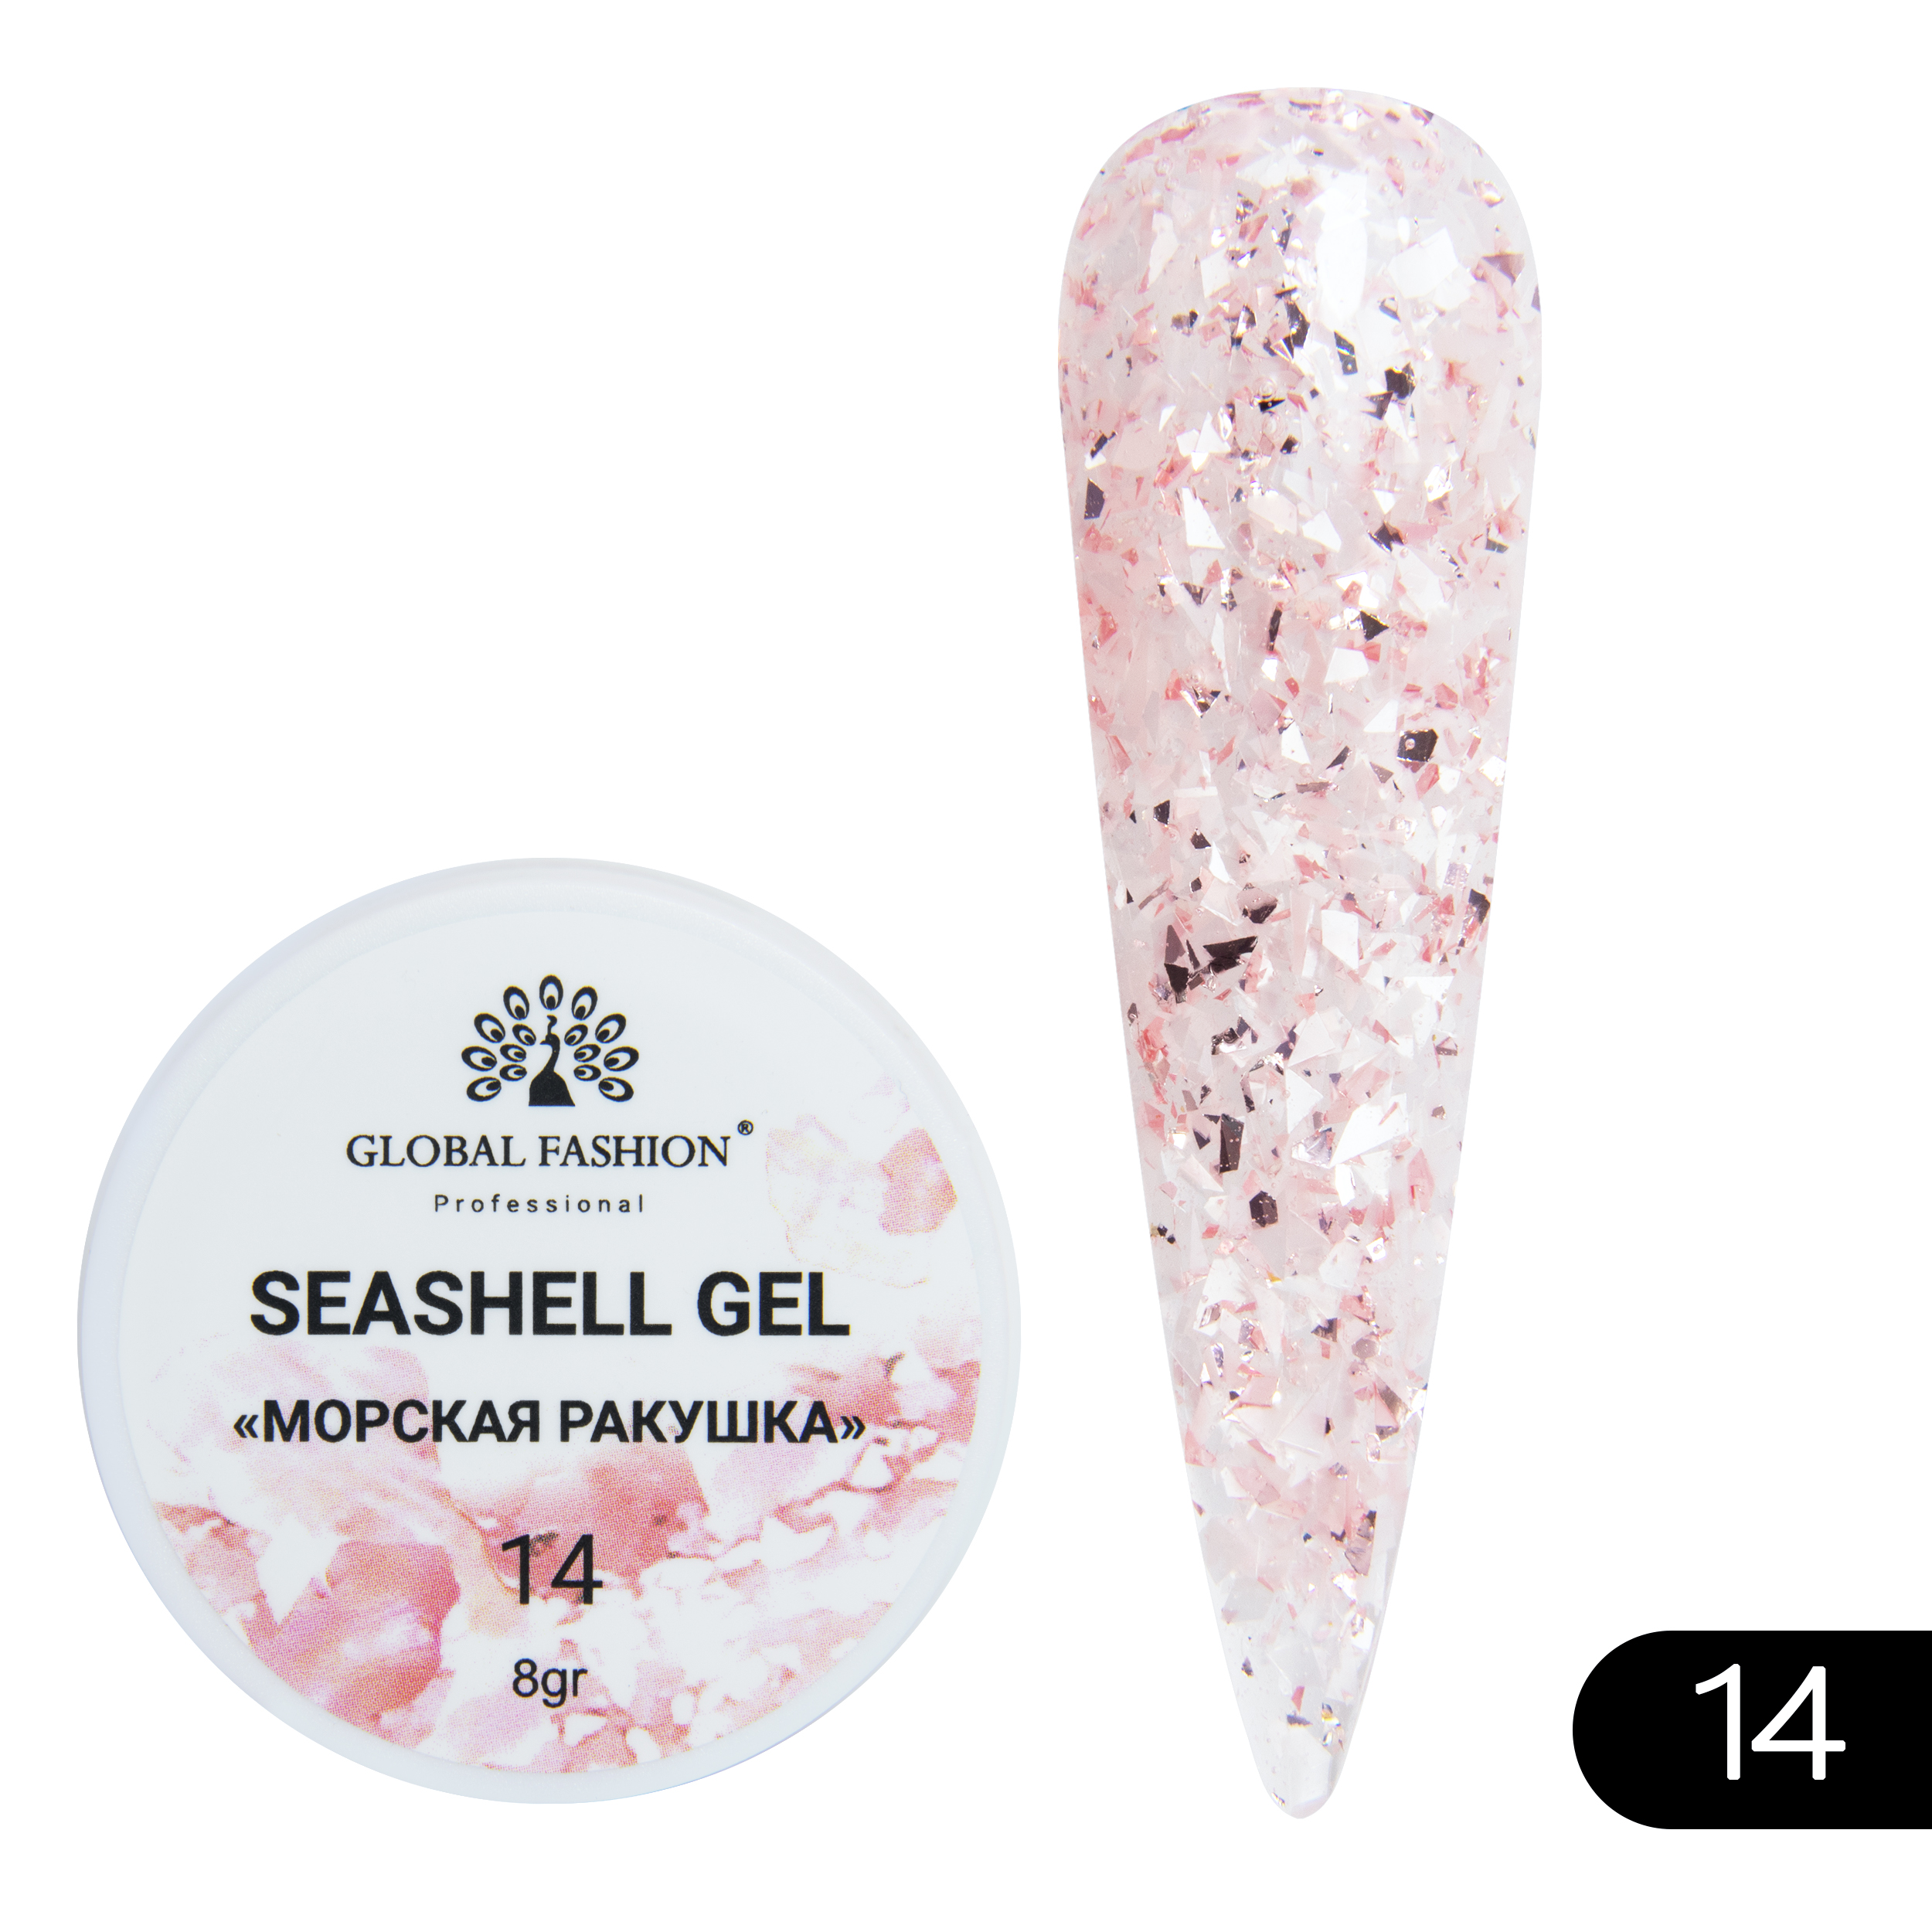 Гель-краска Global Fashion для ногтей с мраморным эффектом ракушки №14 Seashell Gel 5 г сачок для аквариумных рыб ferplast 50